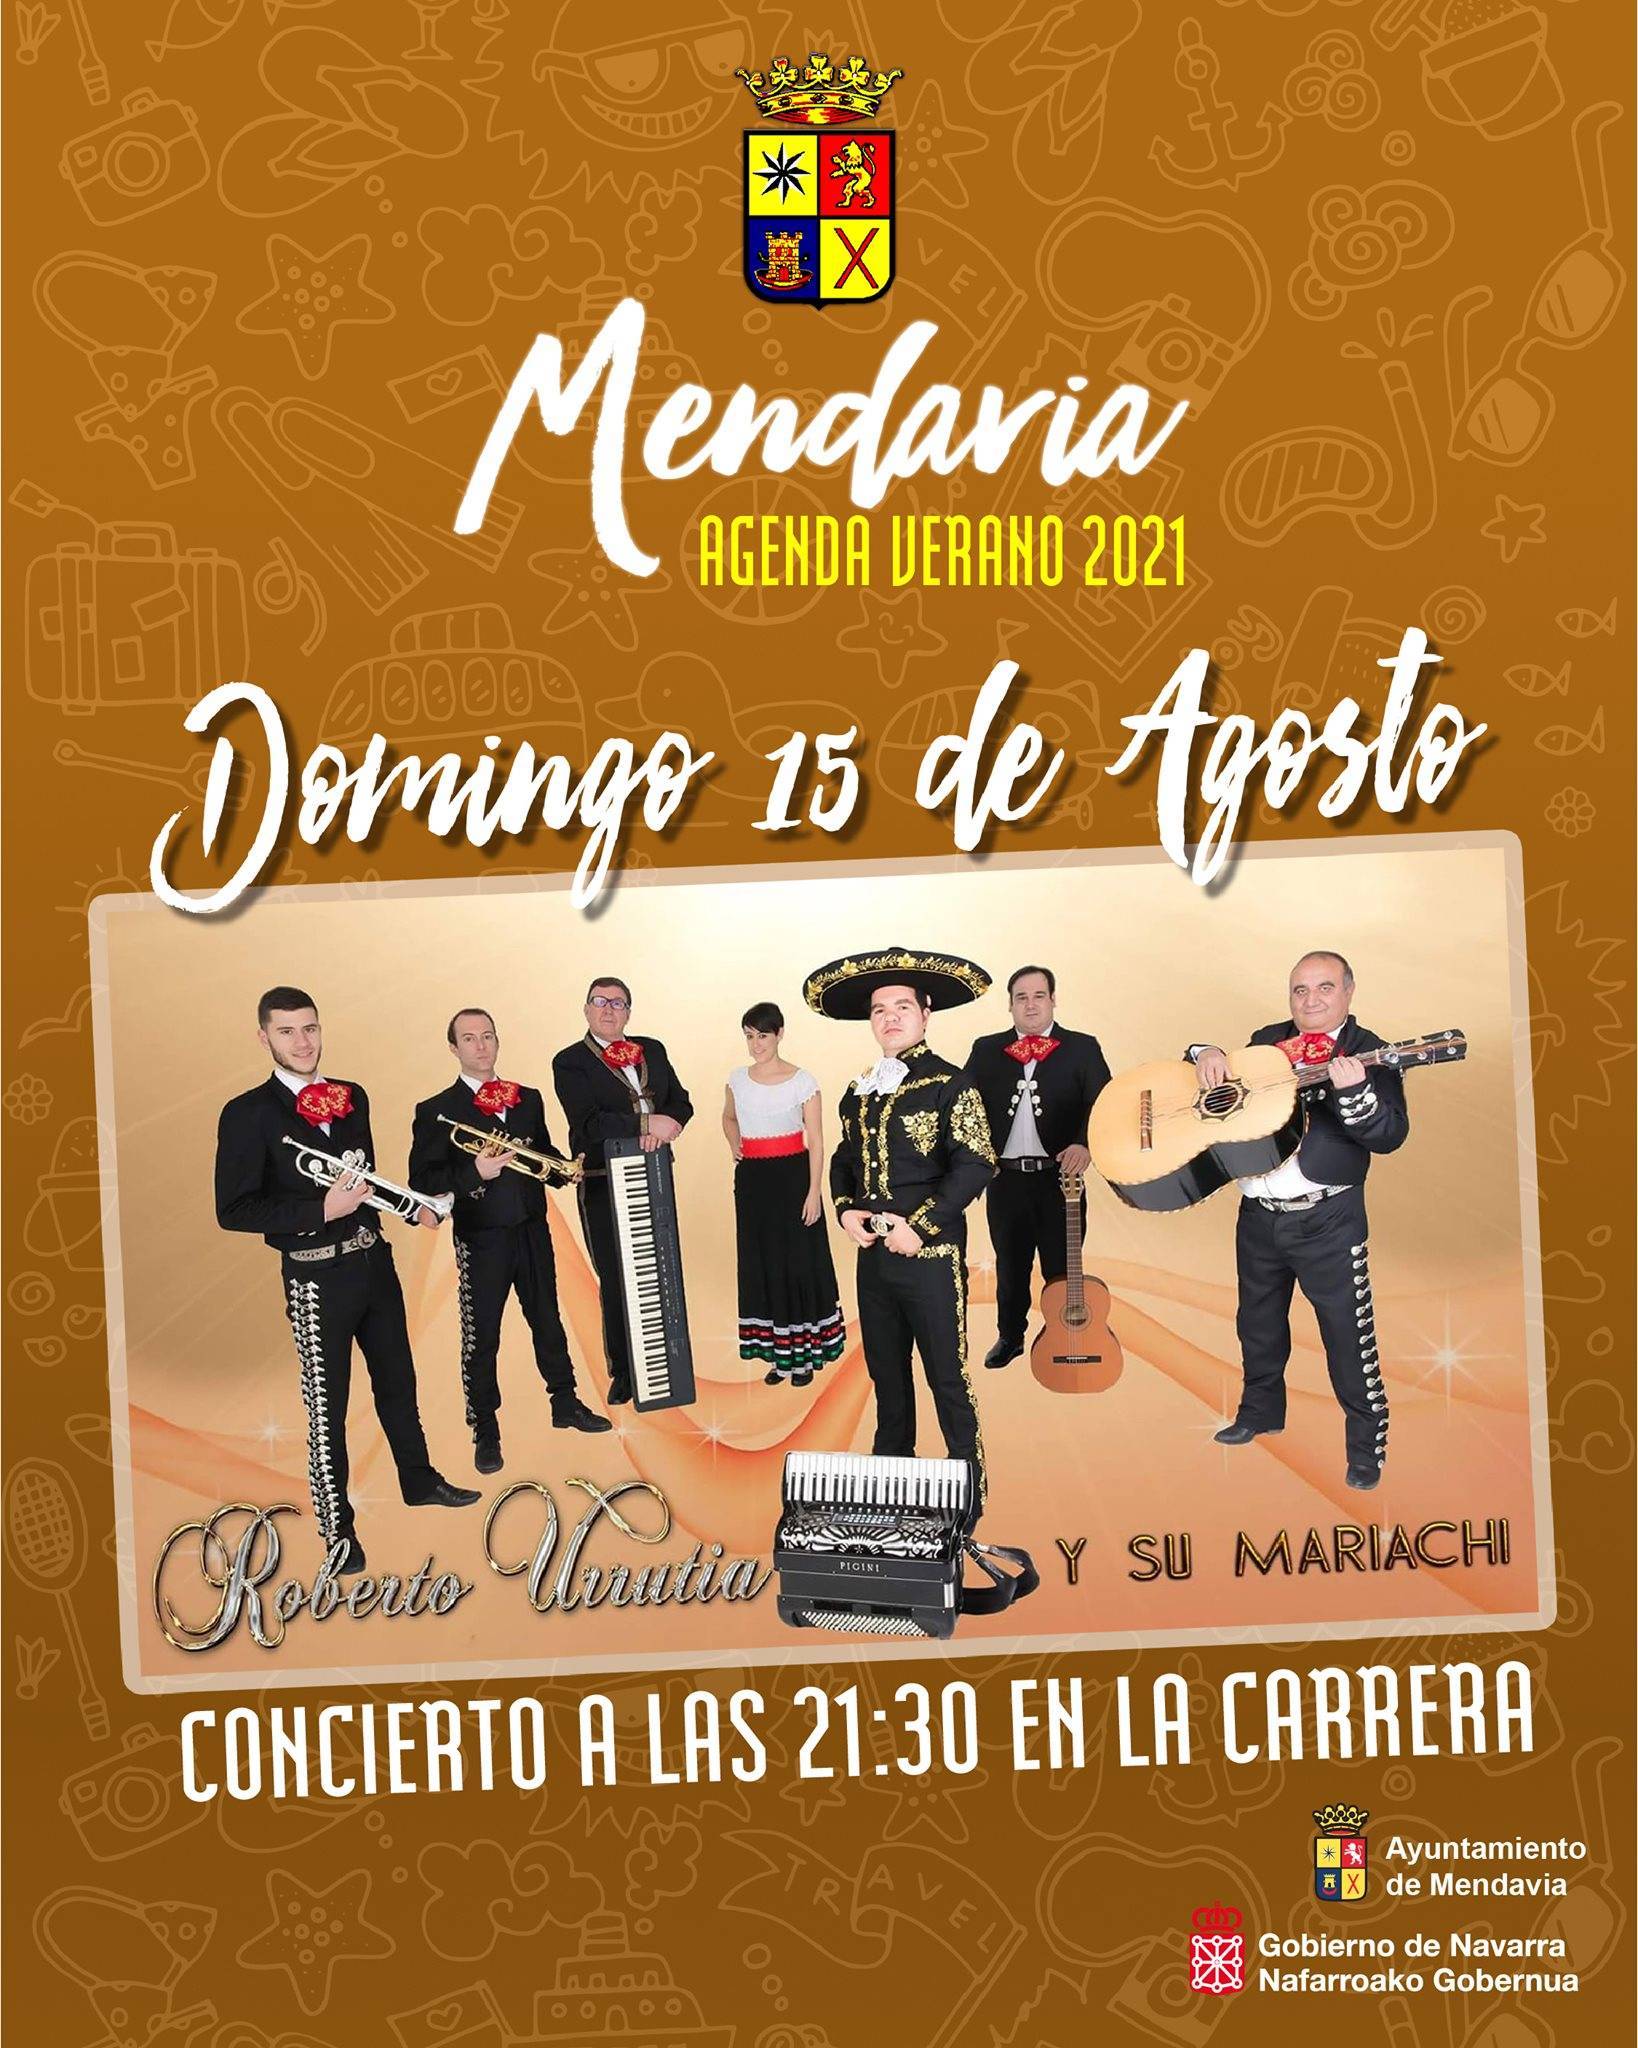 Roberto Urrutia y su mariachi (2021) - Mendavia (Navarra)